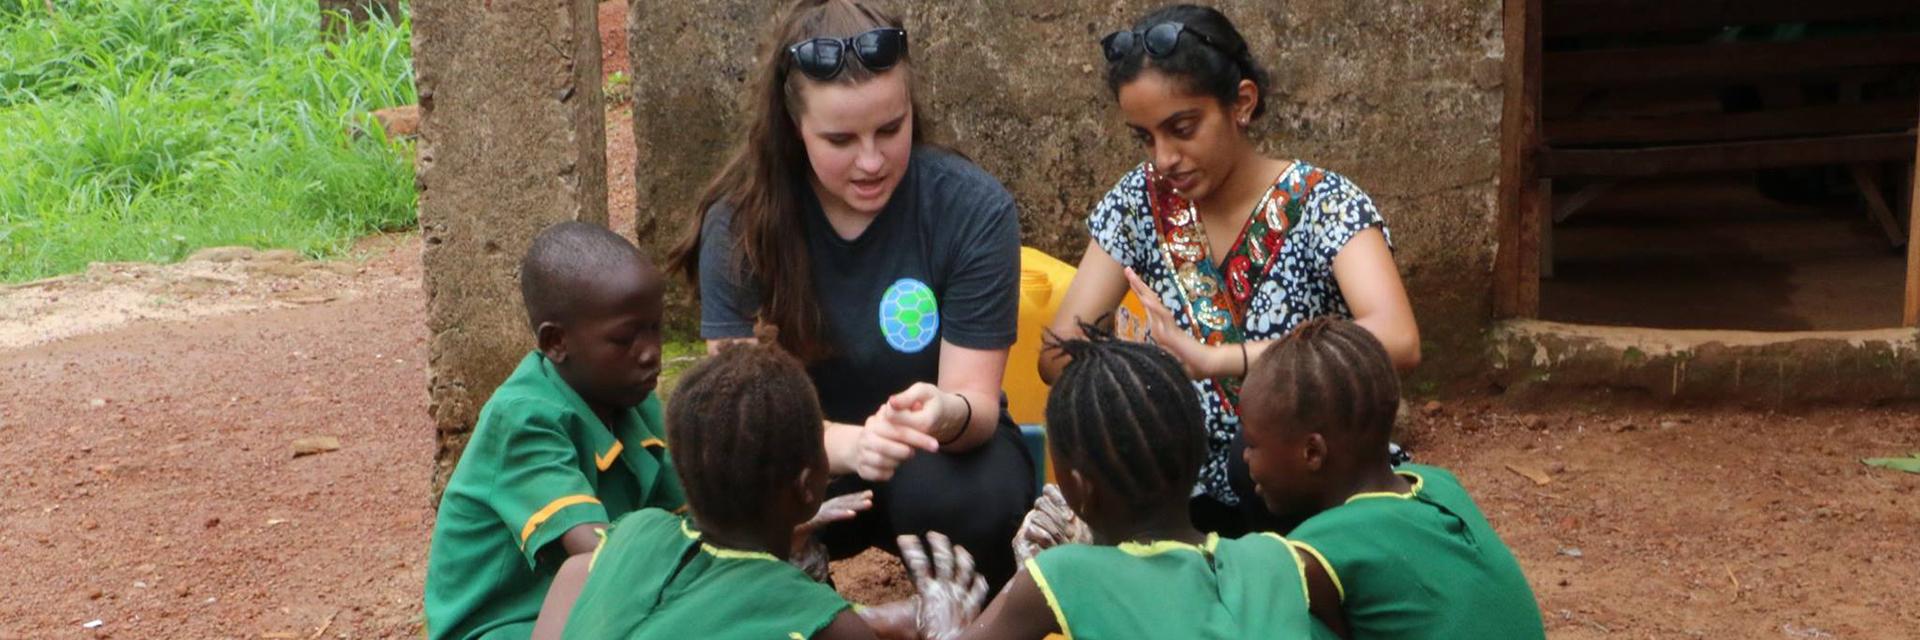 UMD students demonstrate handwashing technique with school kids in Sierra Leone